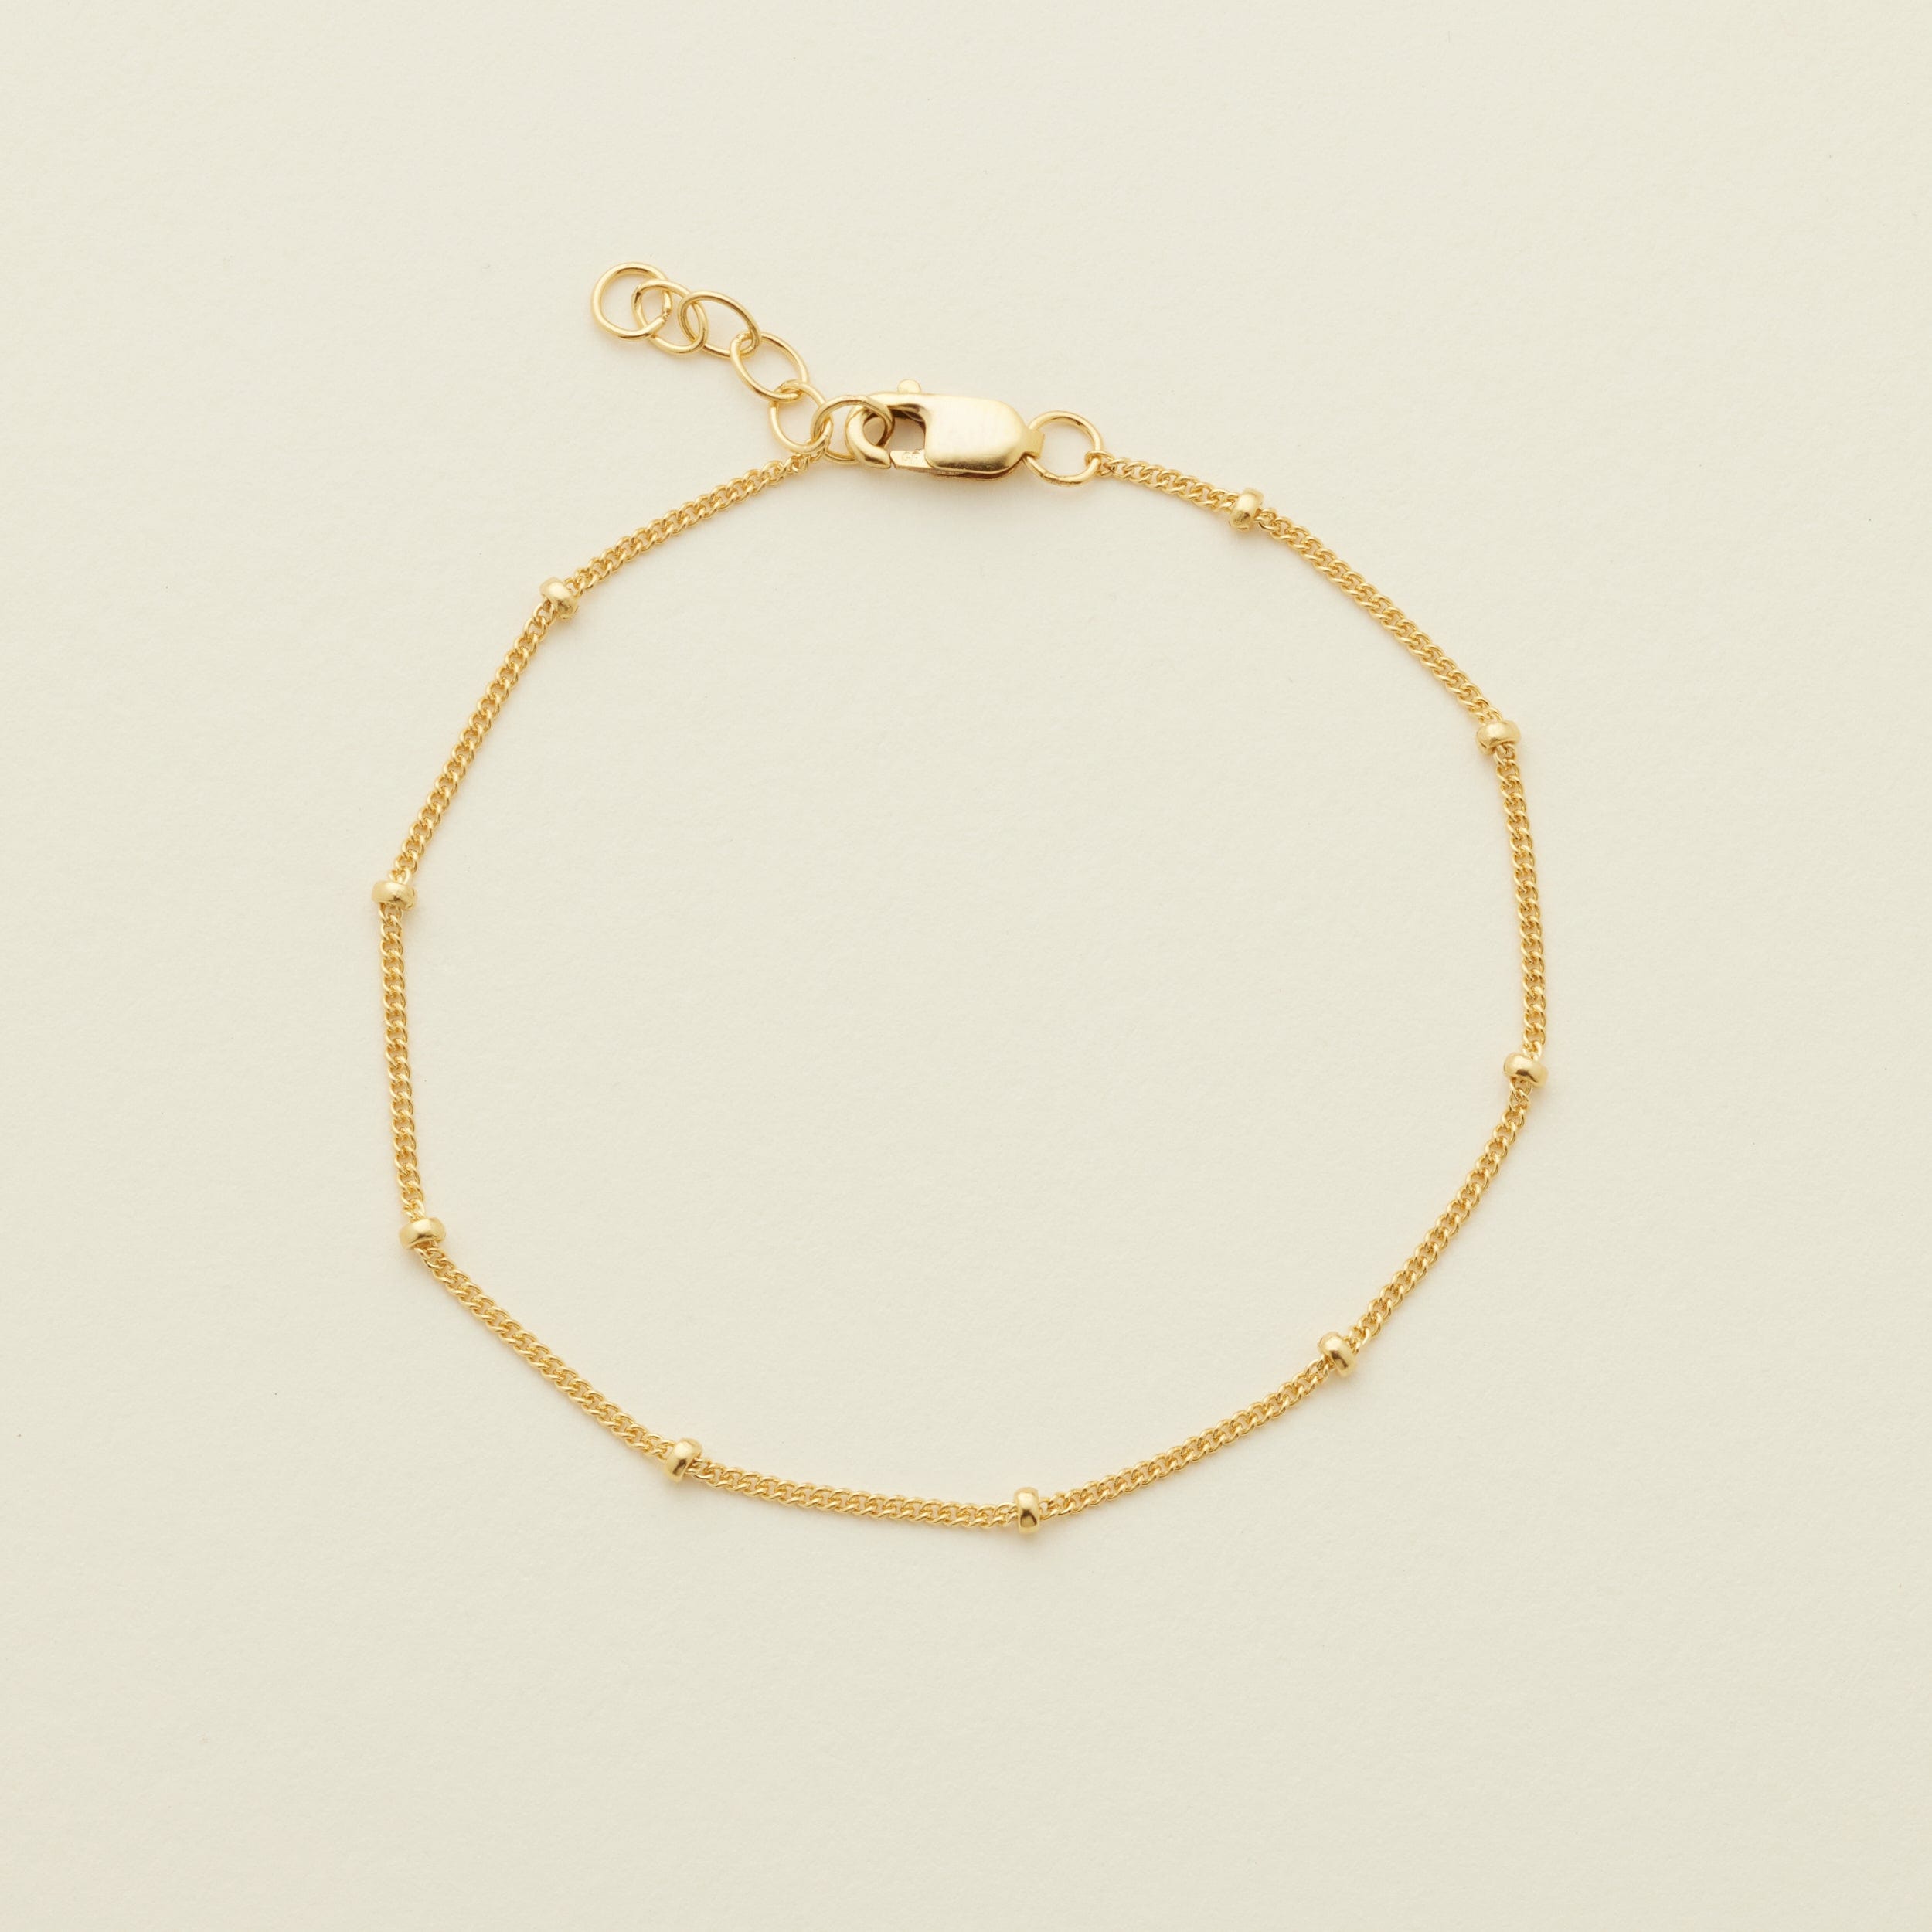 Satellite Bracelet Gold Filled / 5.5" Bracelet